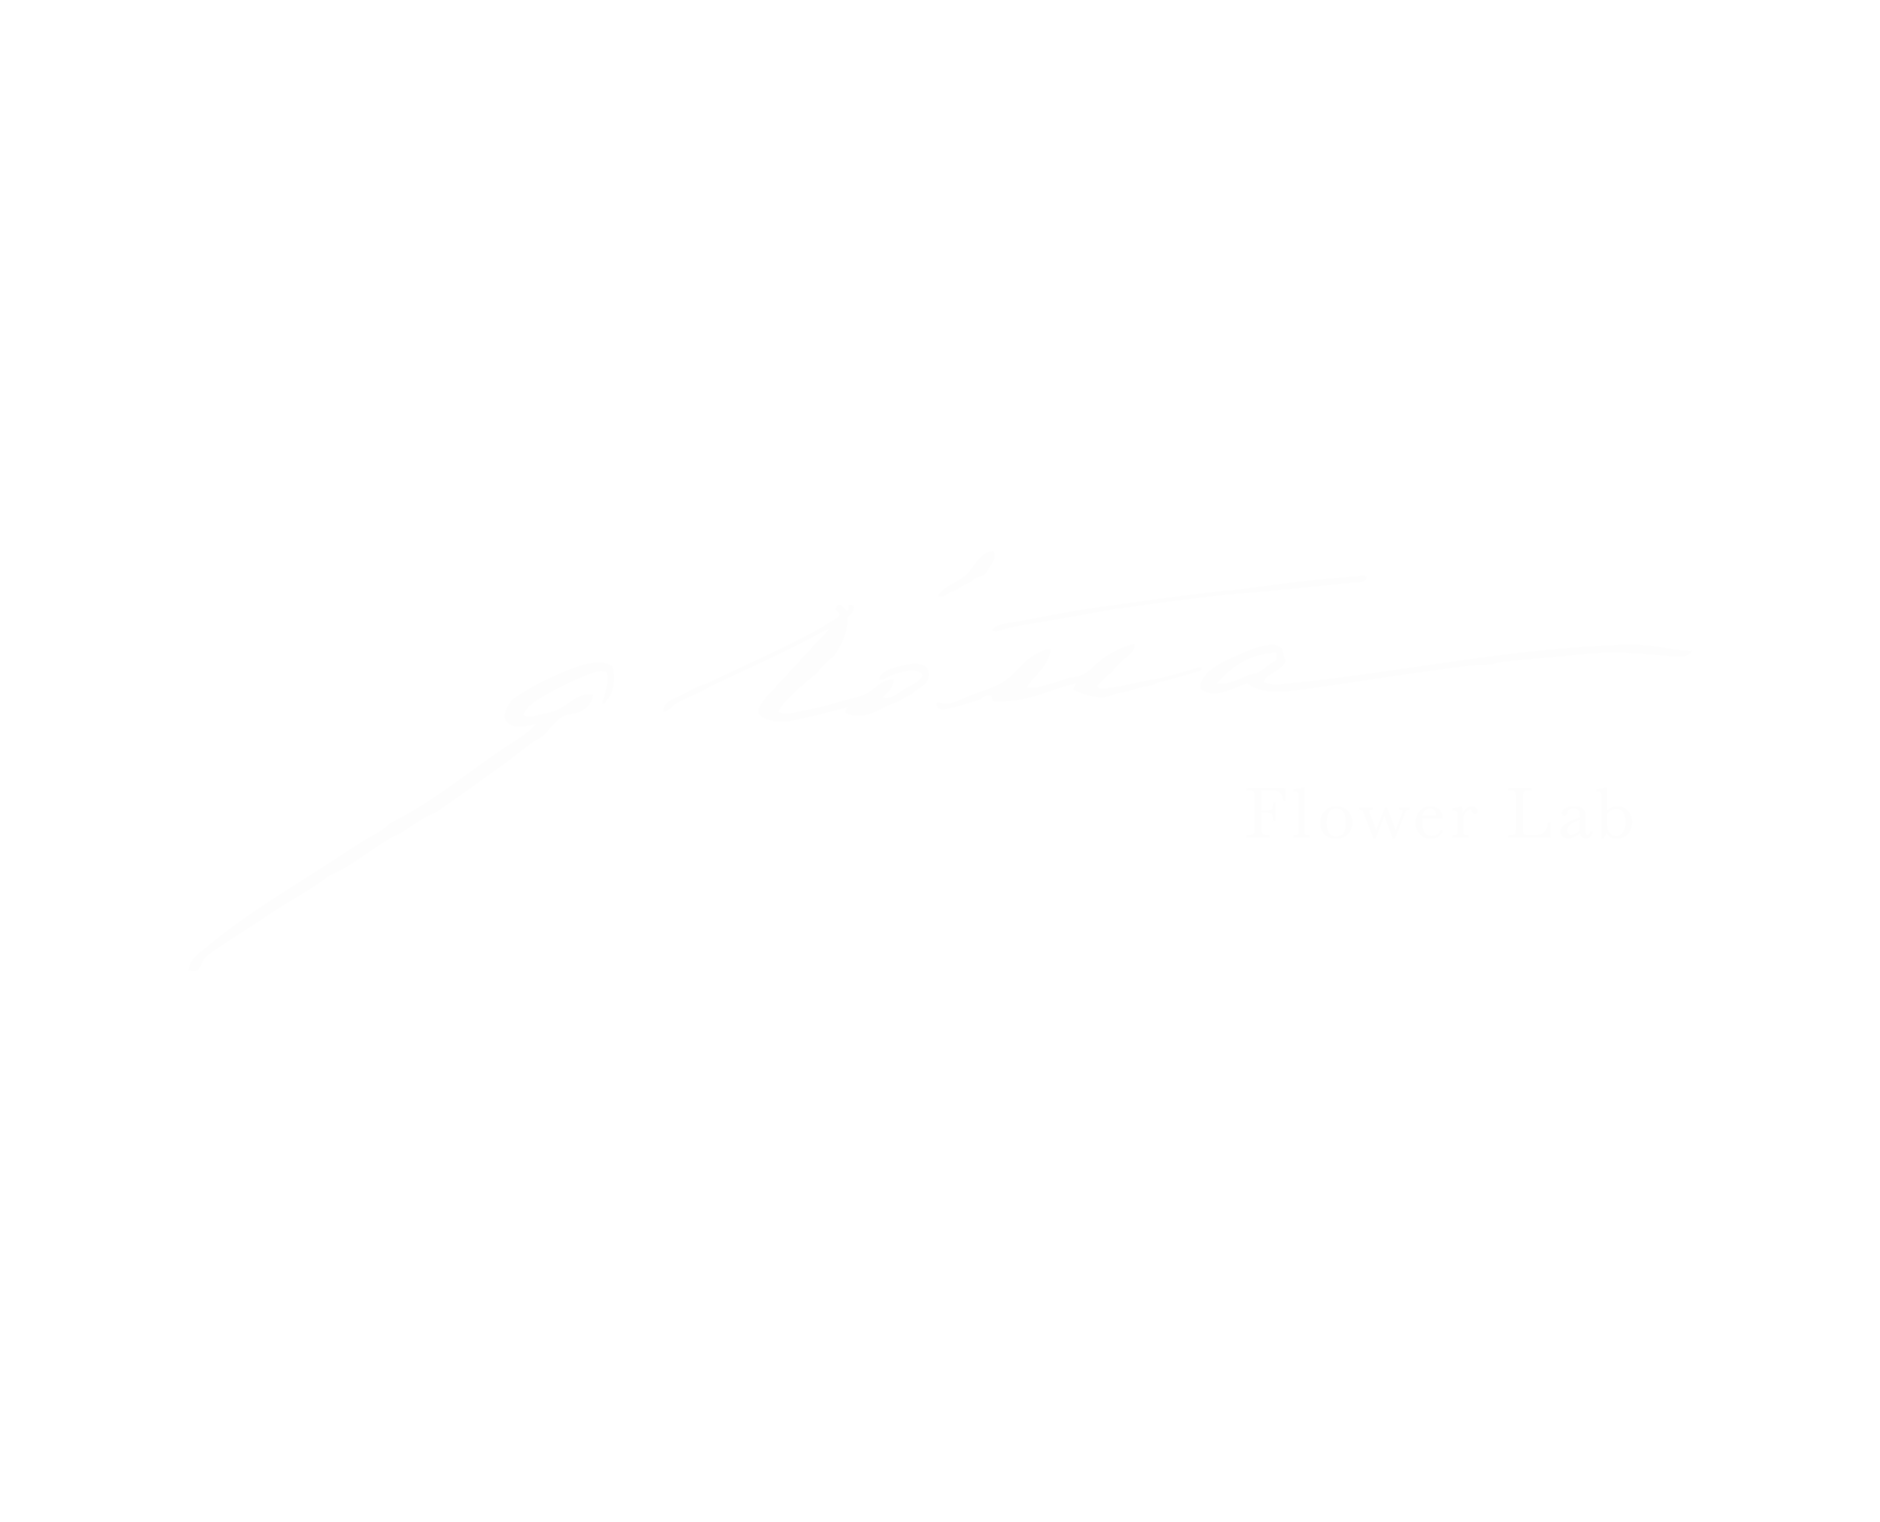 Grótta Flower Lab